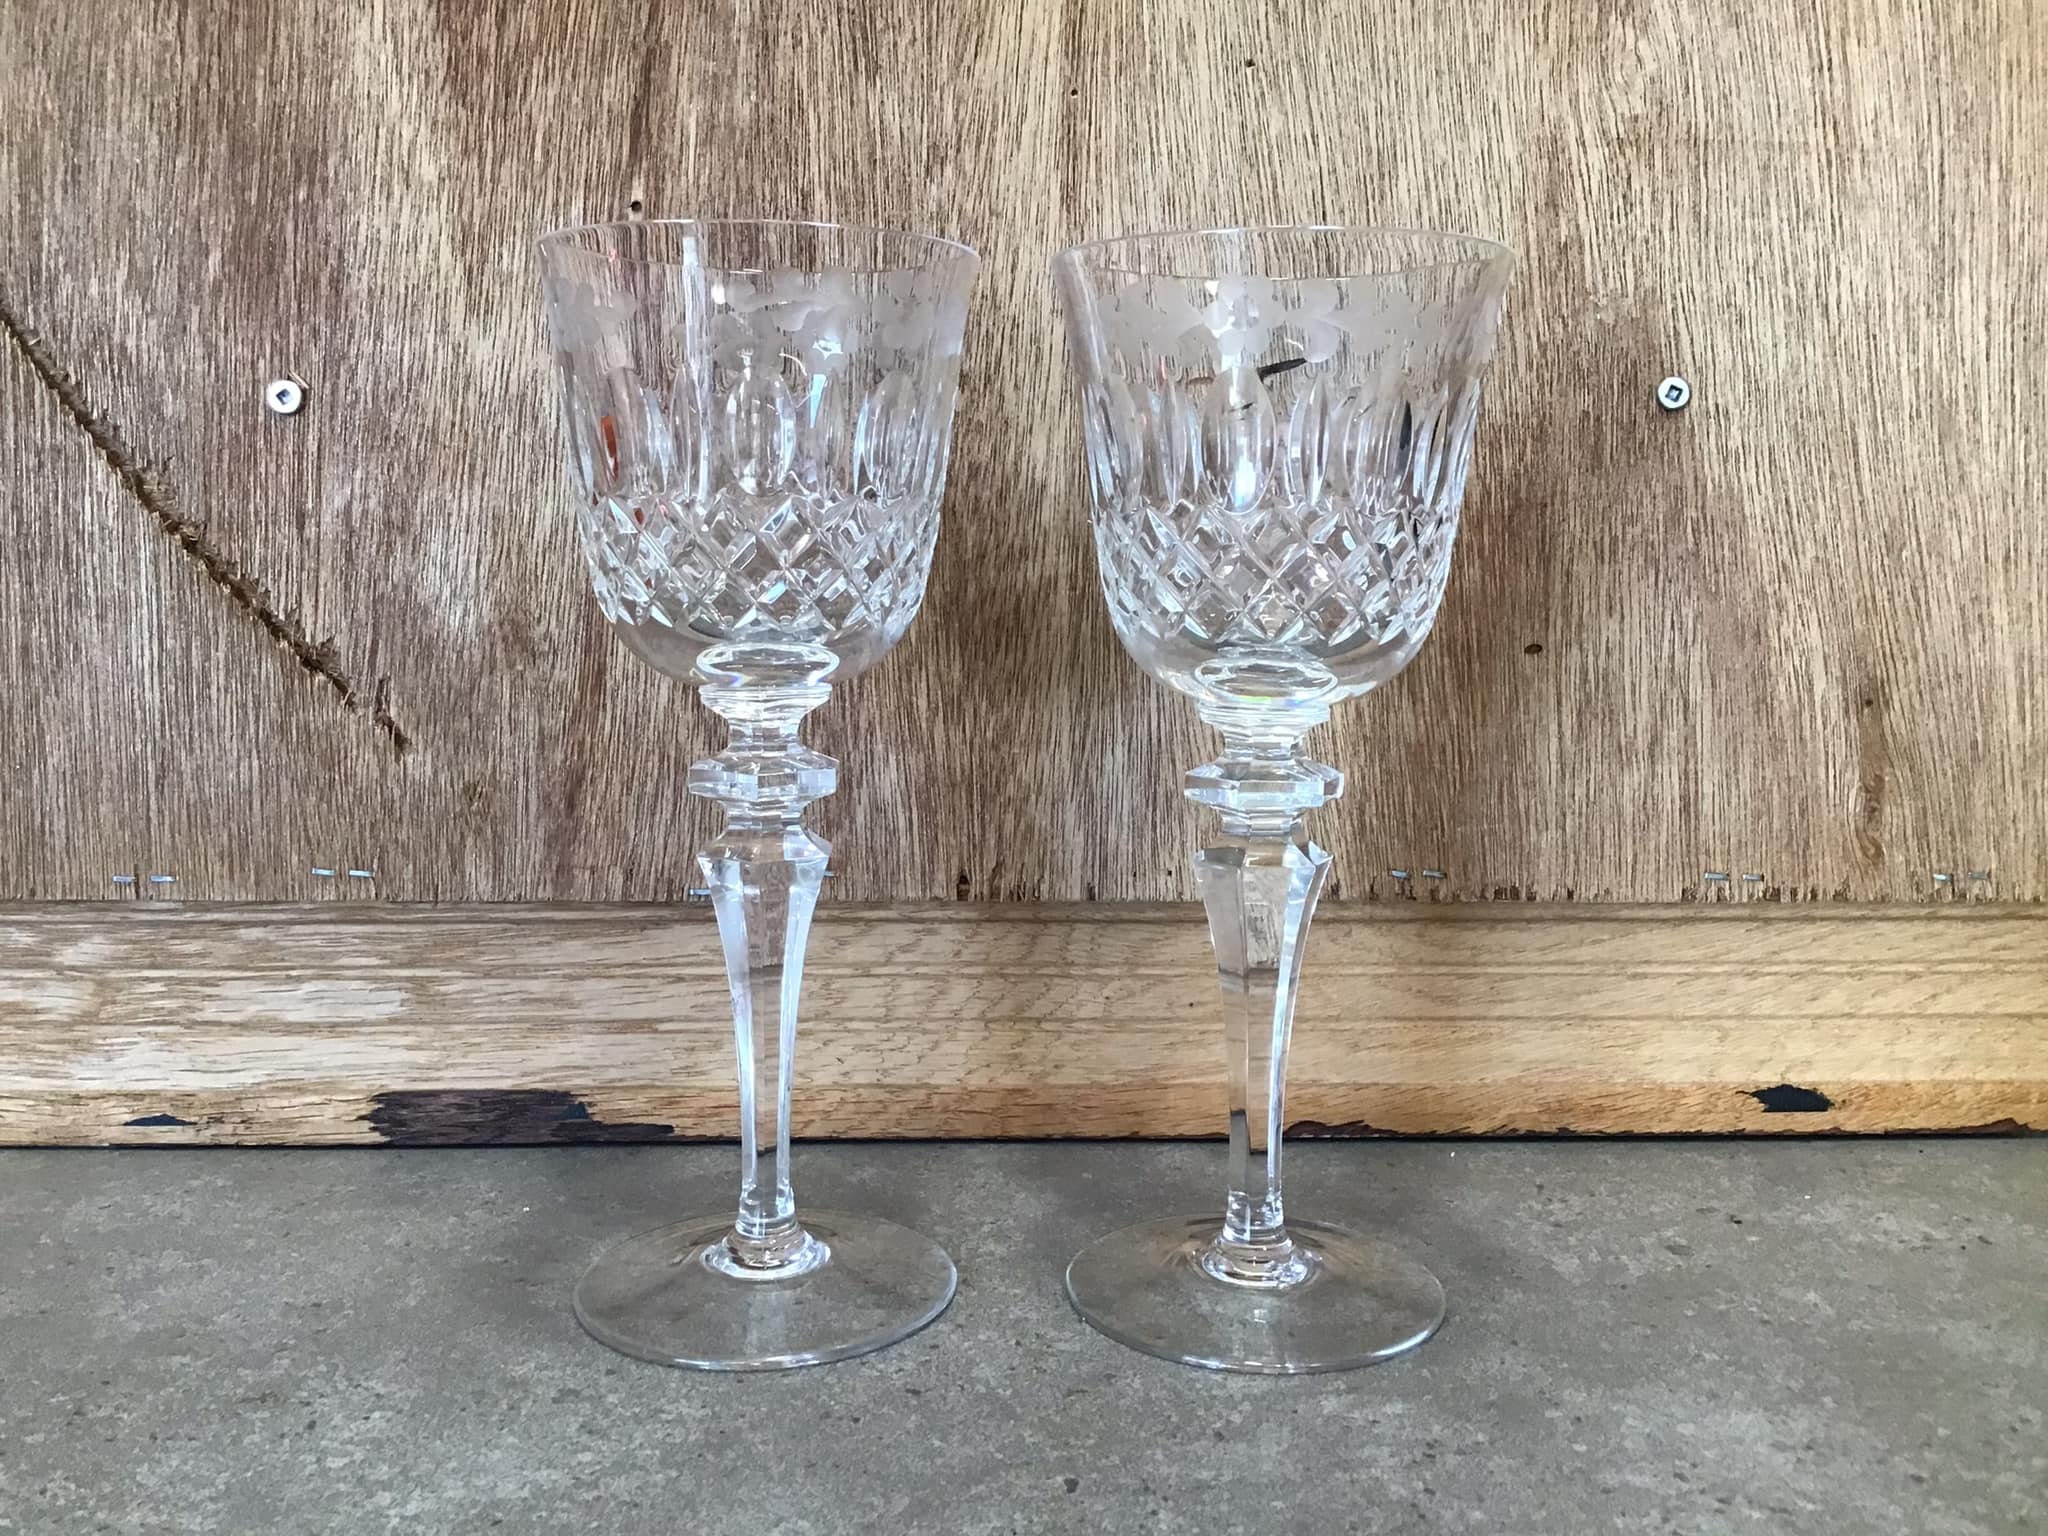 2 Antique or Vintage Etched Wine Glasses Set, Crystal Goblets, Water Glasses,  Wine Glasses, Tall Stem Tulip Glasses, 8 Tall. 